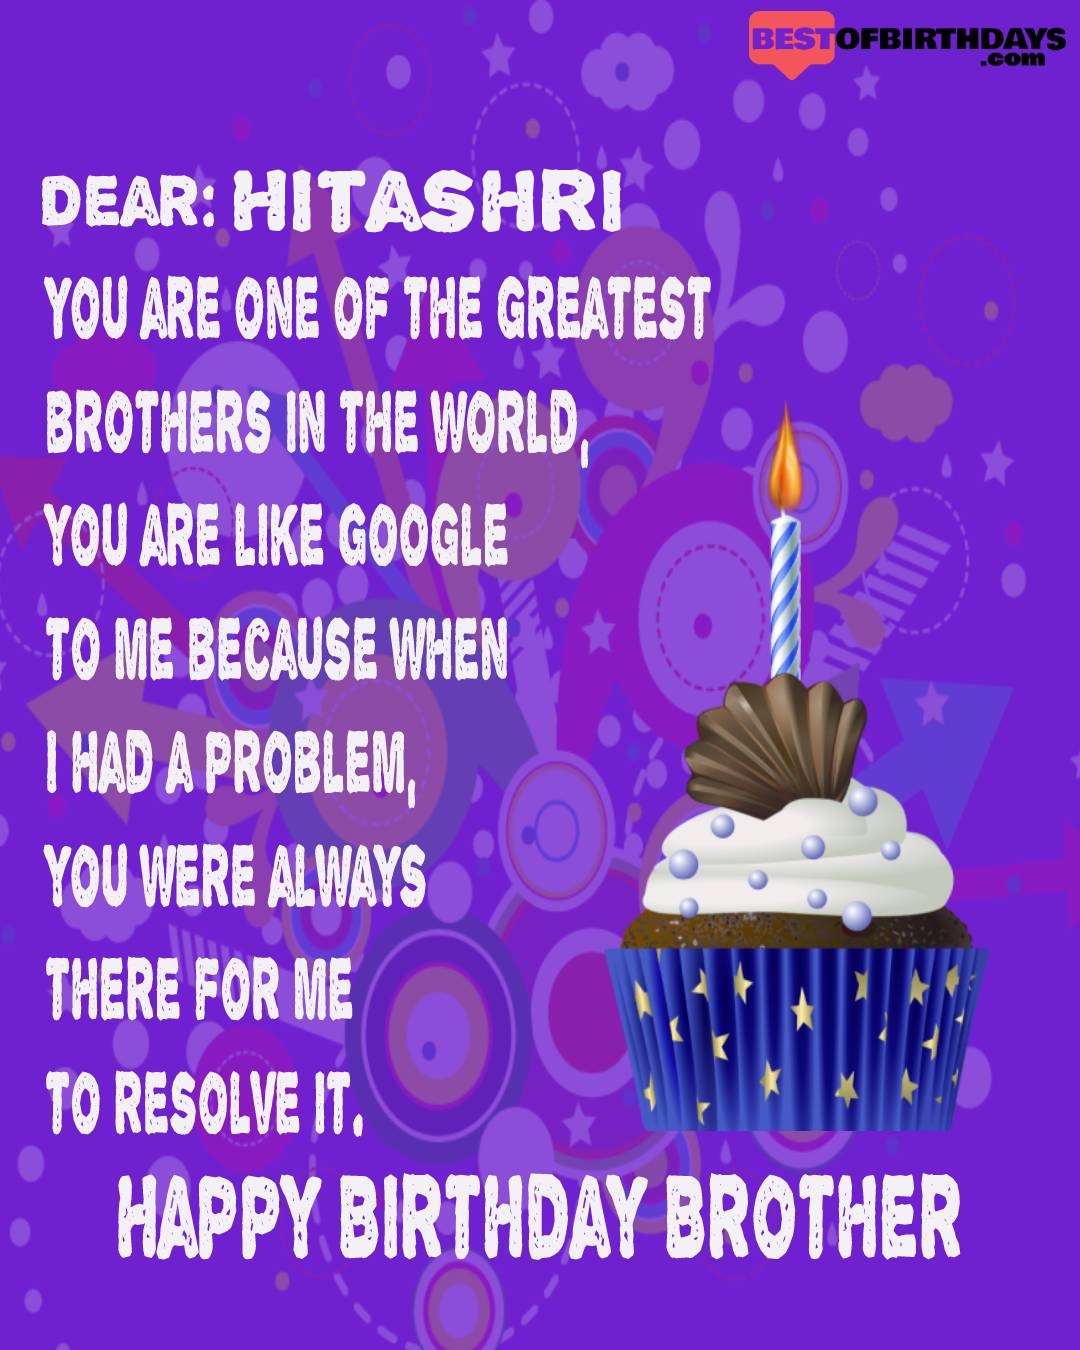 Happy birthday hitashri bhai brother bro